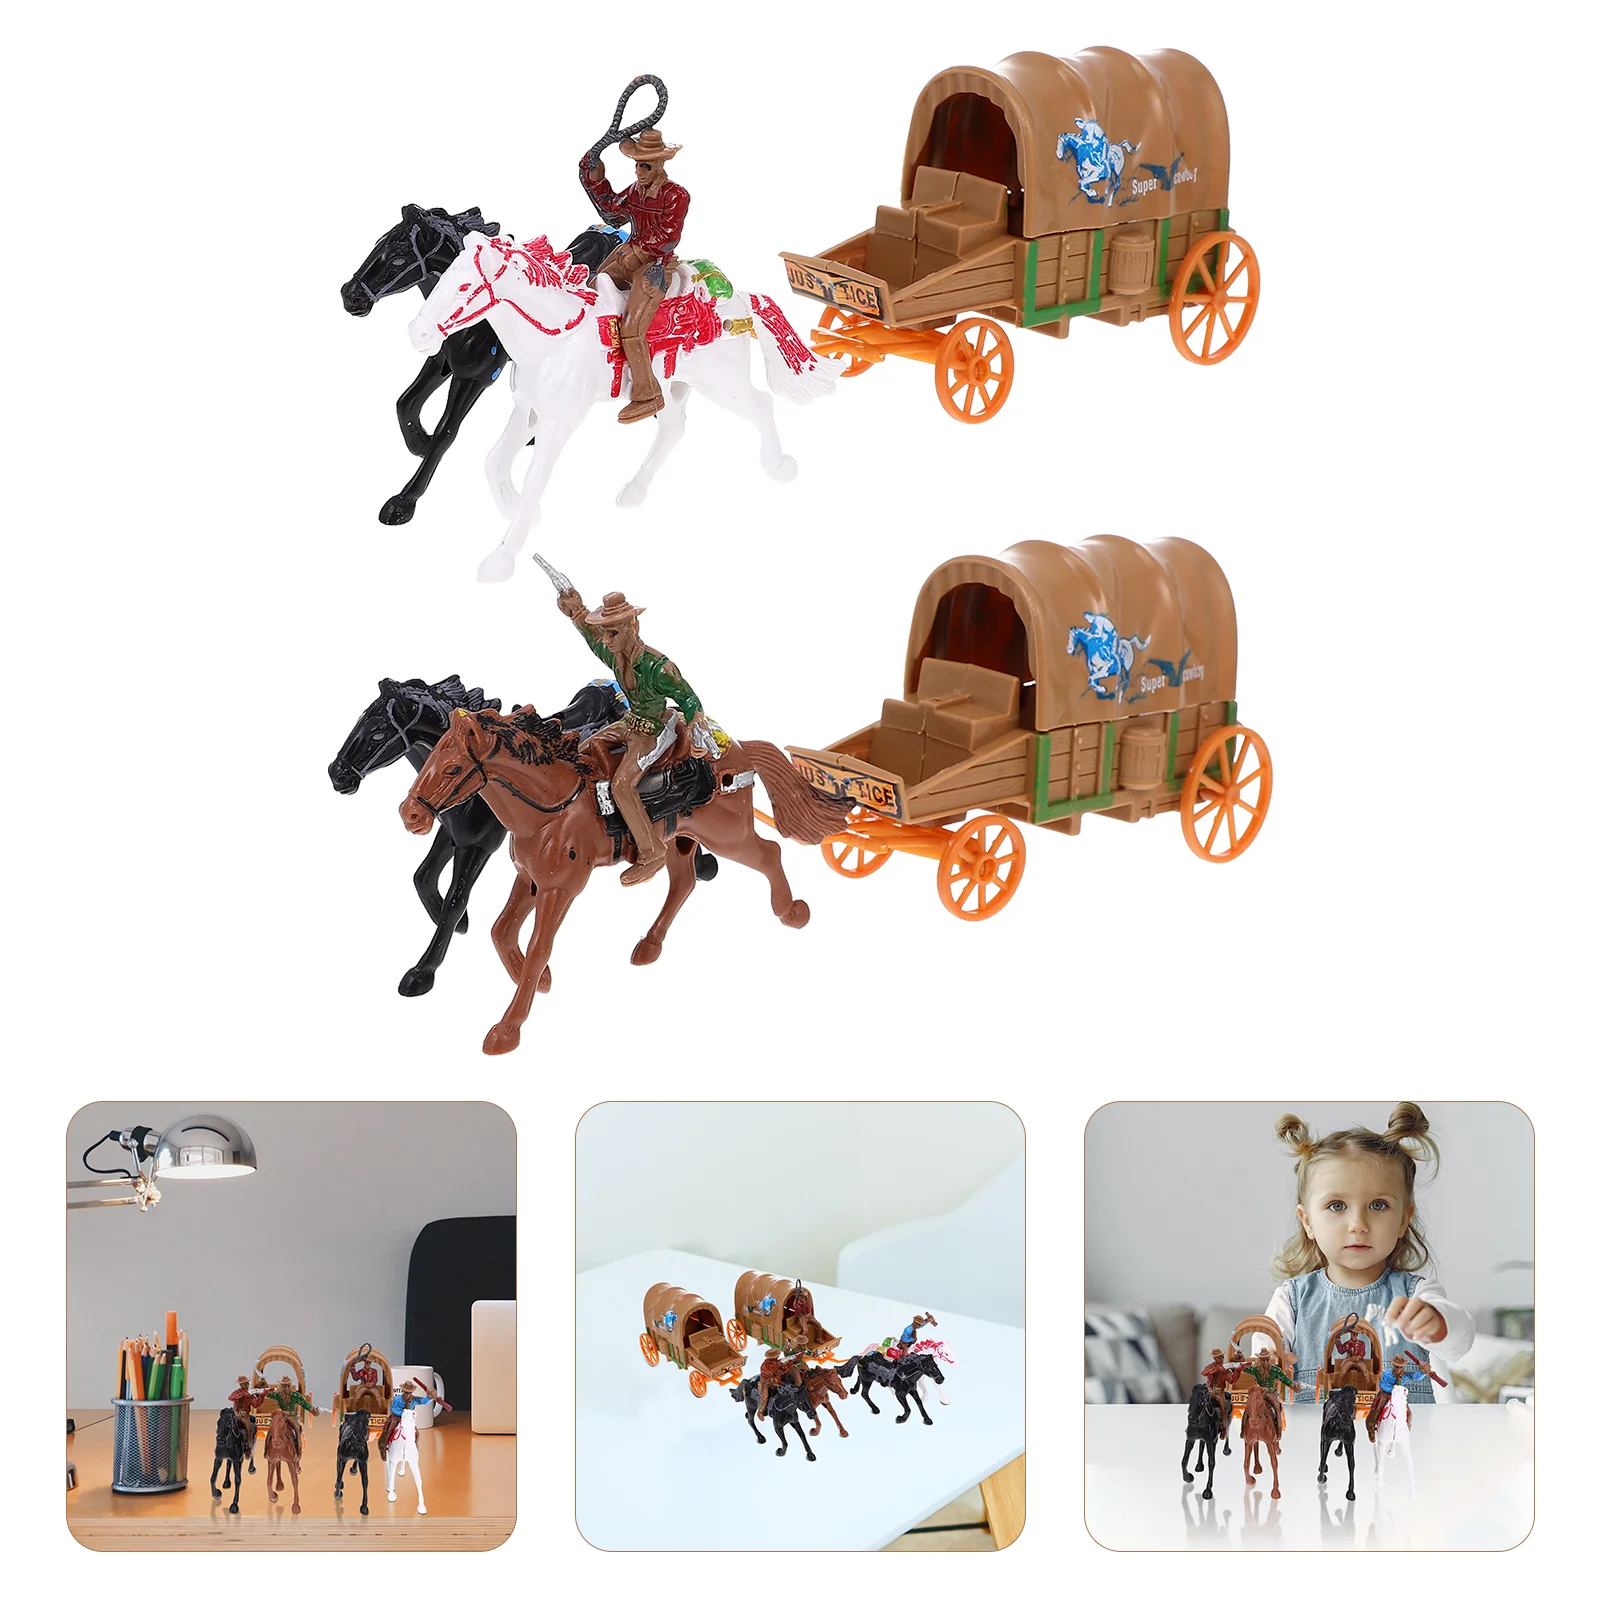 

Toyvian Home Decor 2 Set Roping Cowboy Horse Toy Playset West Cowboy Carriage Models Plastic Figures Playset Miniature